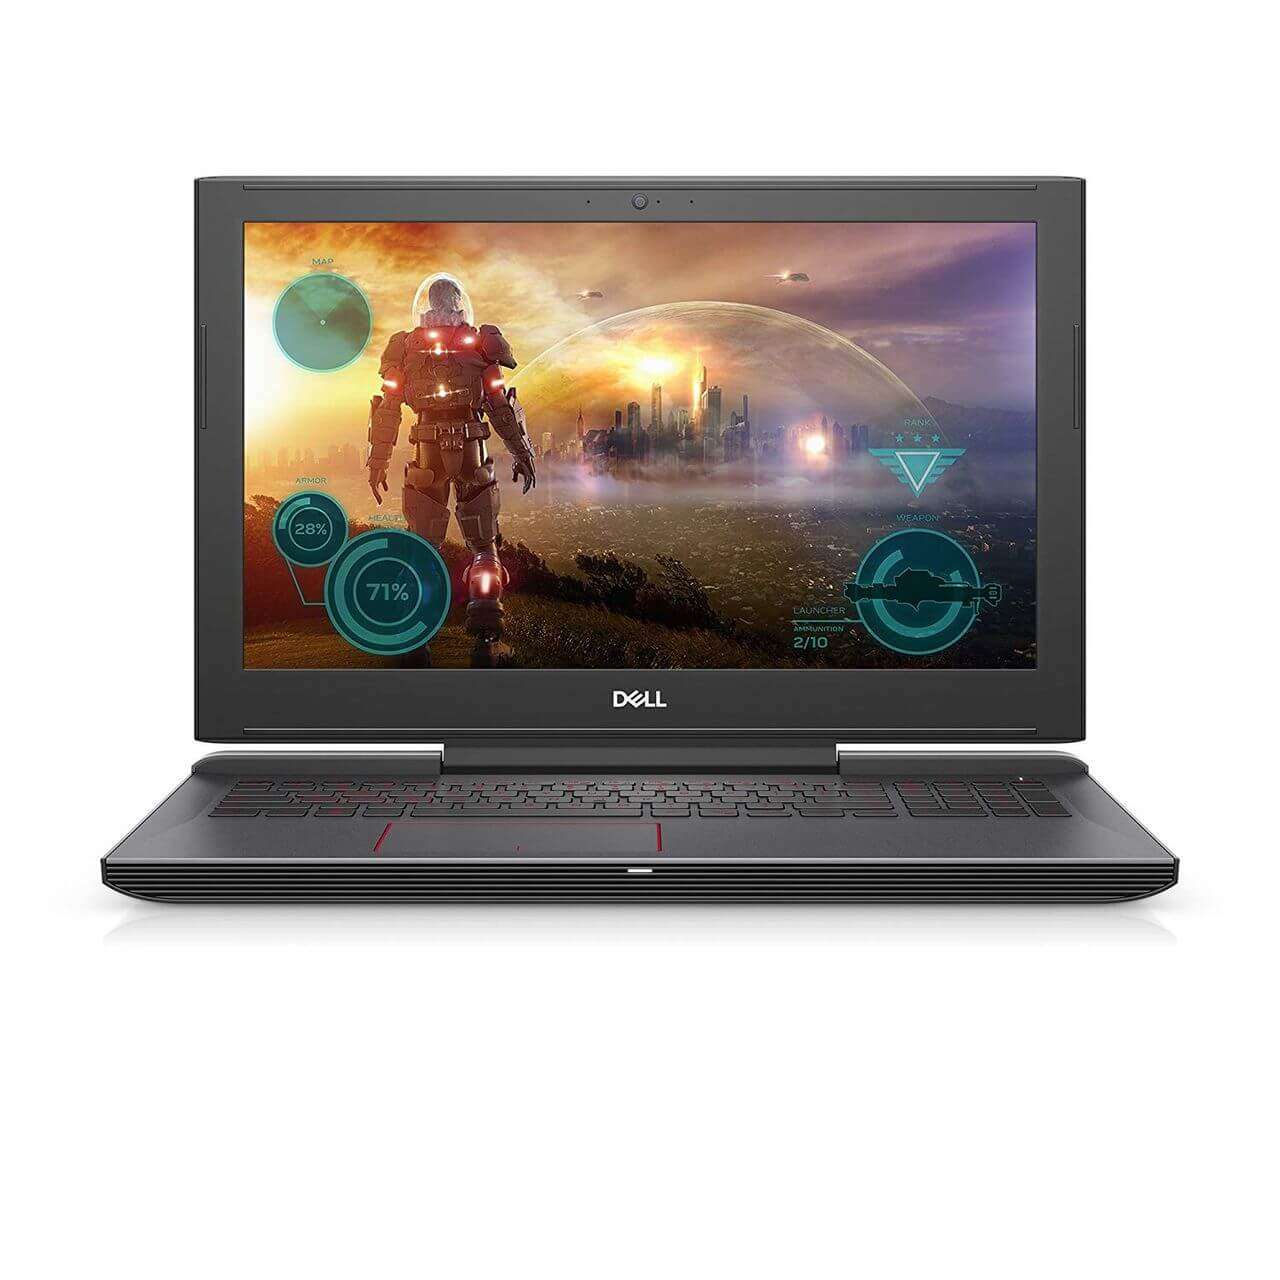 DELL Inspiron G5 5587 Gaming Laptop With 15.6-Inch Display, Intel Core i7 Processor/8GB RAM/1TB HDD+128GB SSD Hybrid Drive/4GB NIVDIA GeForce Graphic Card Black